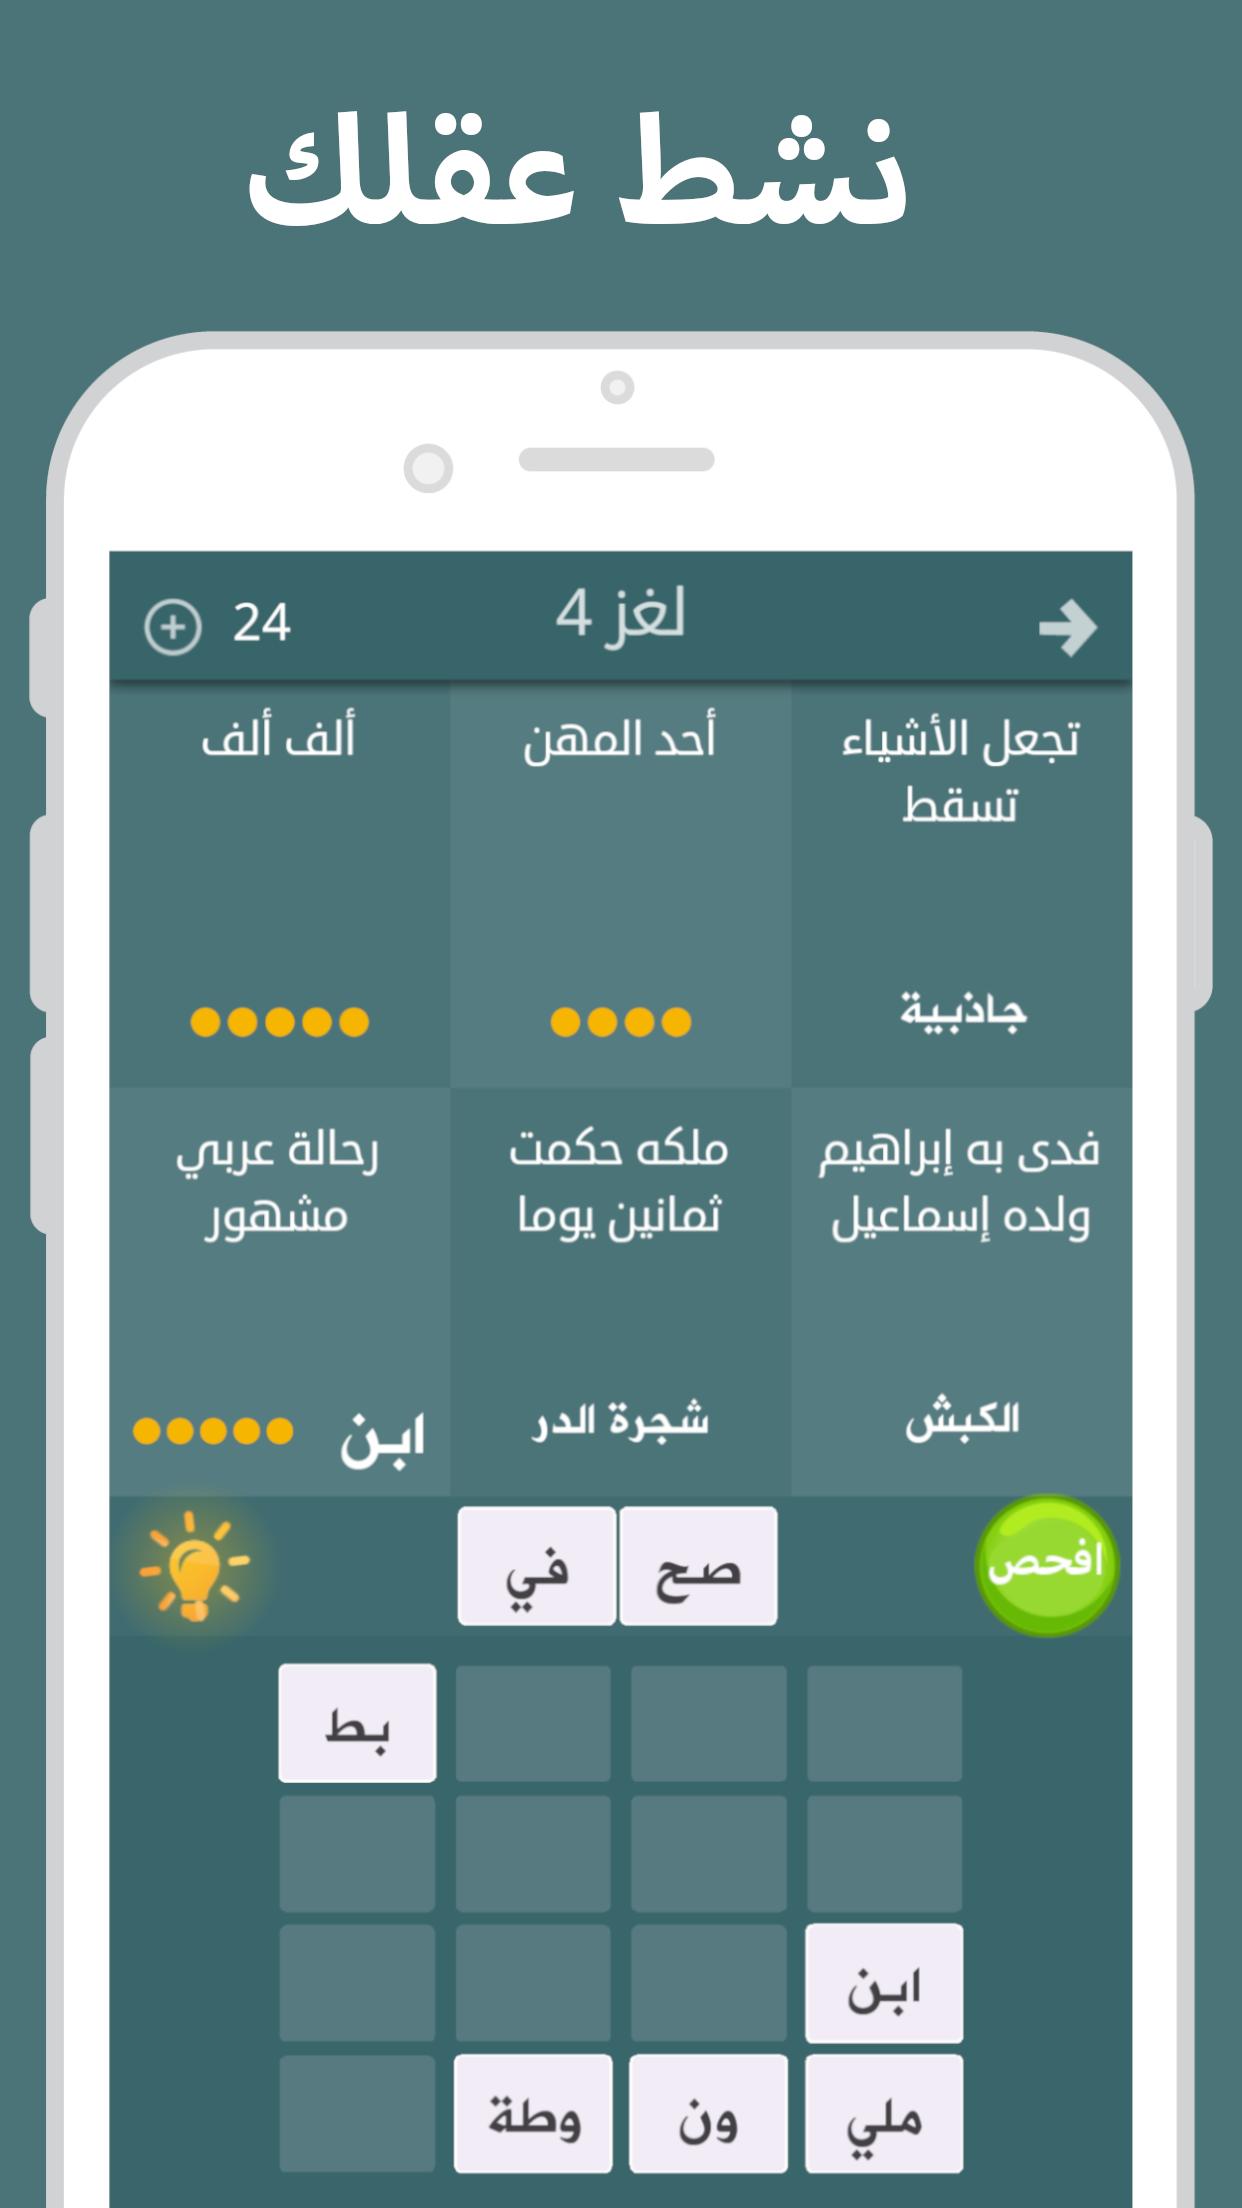 فطحل العرب for Android - APK Download